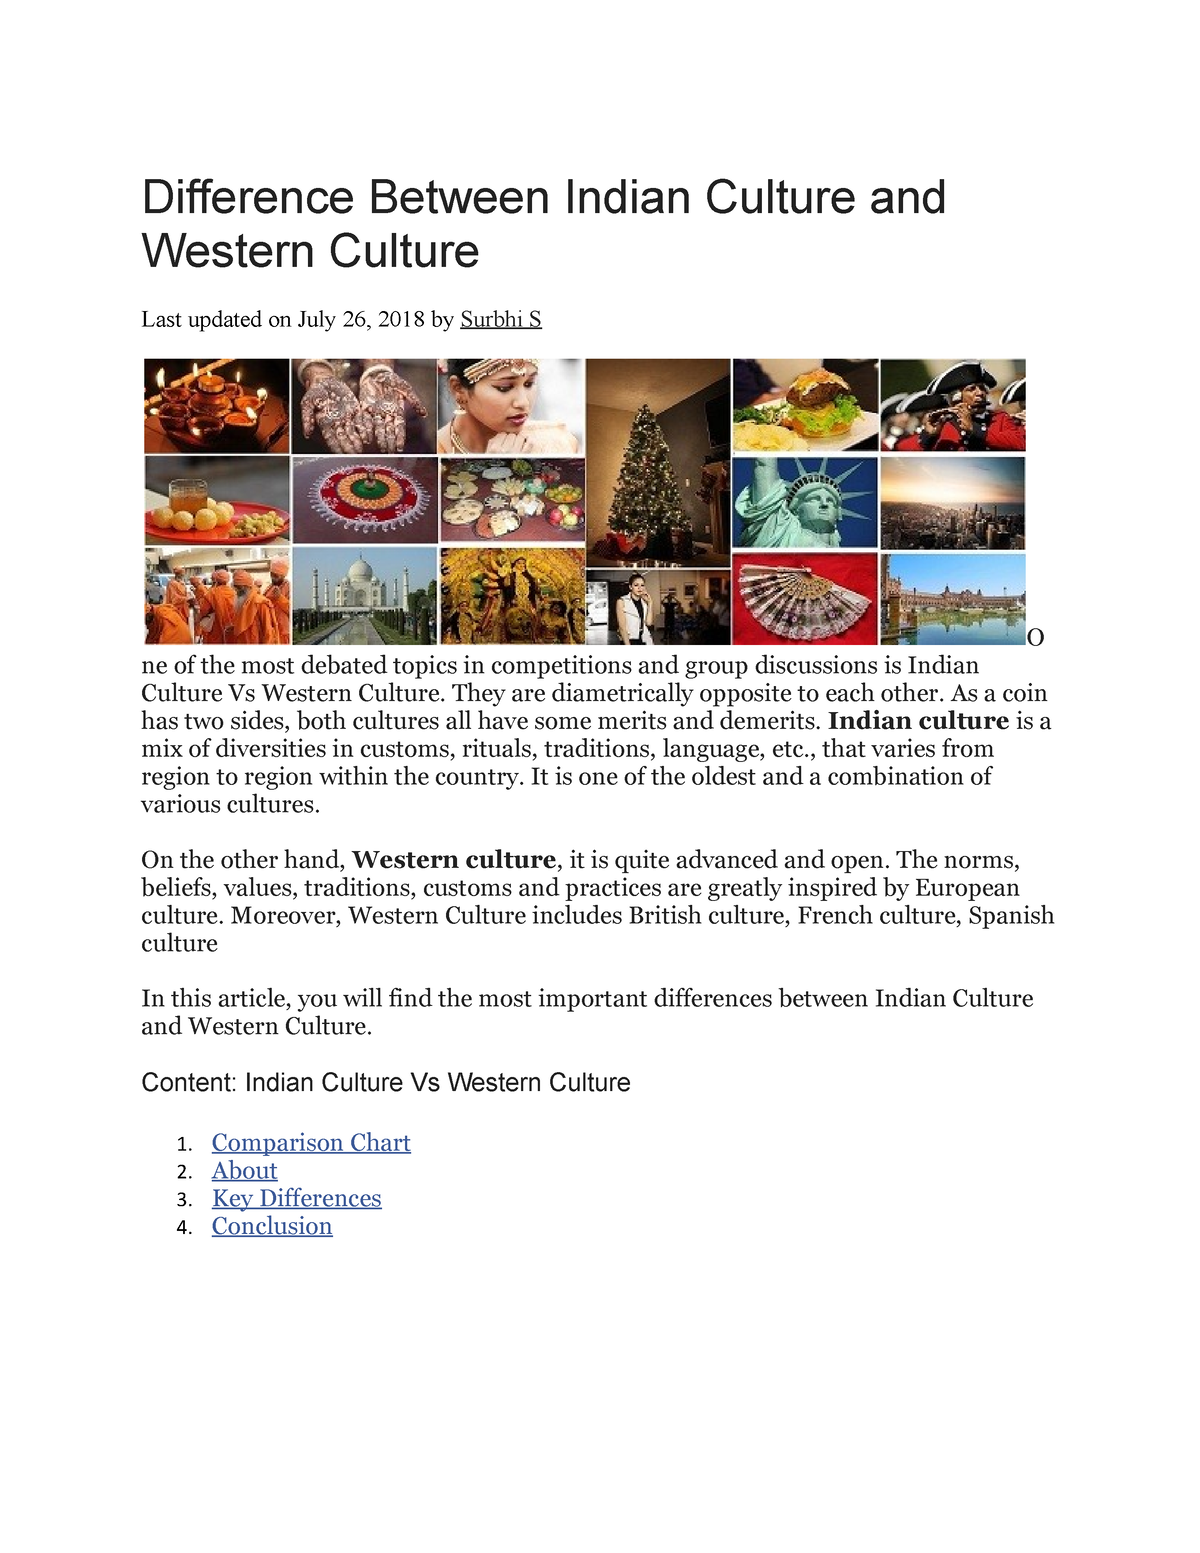 indian culture vs western culture essay in english